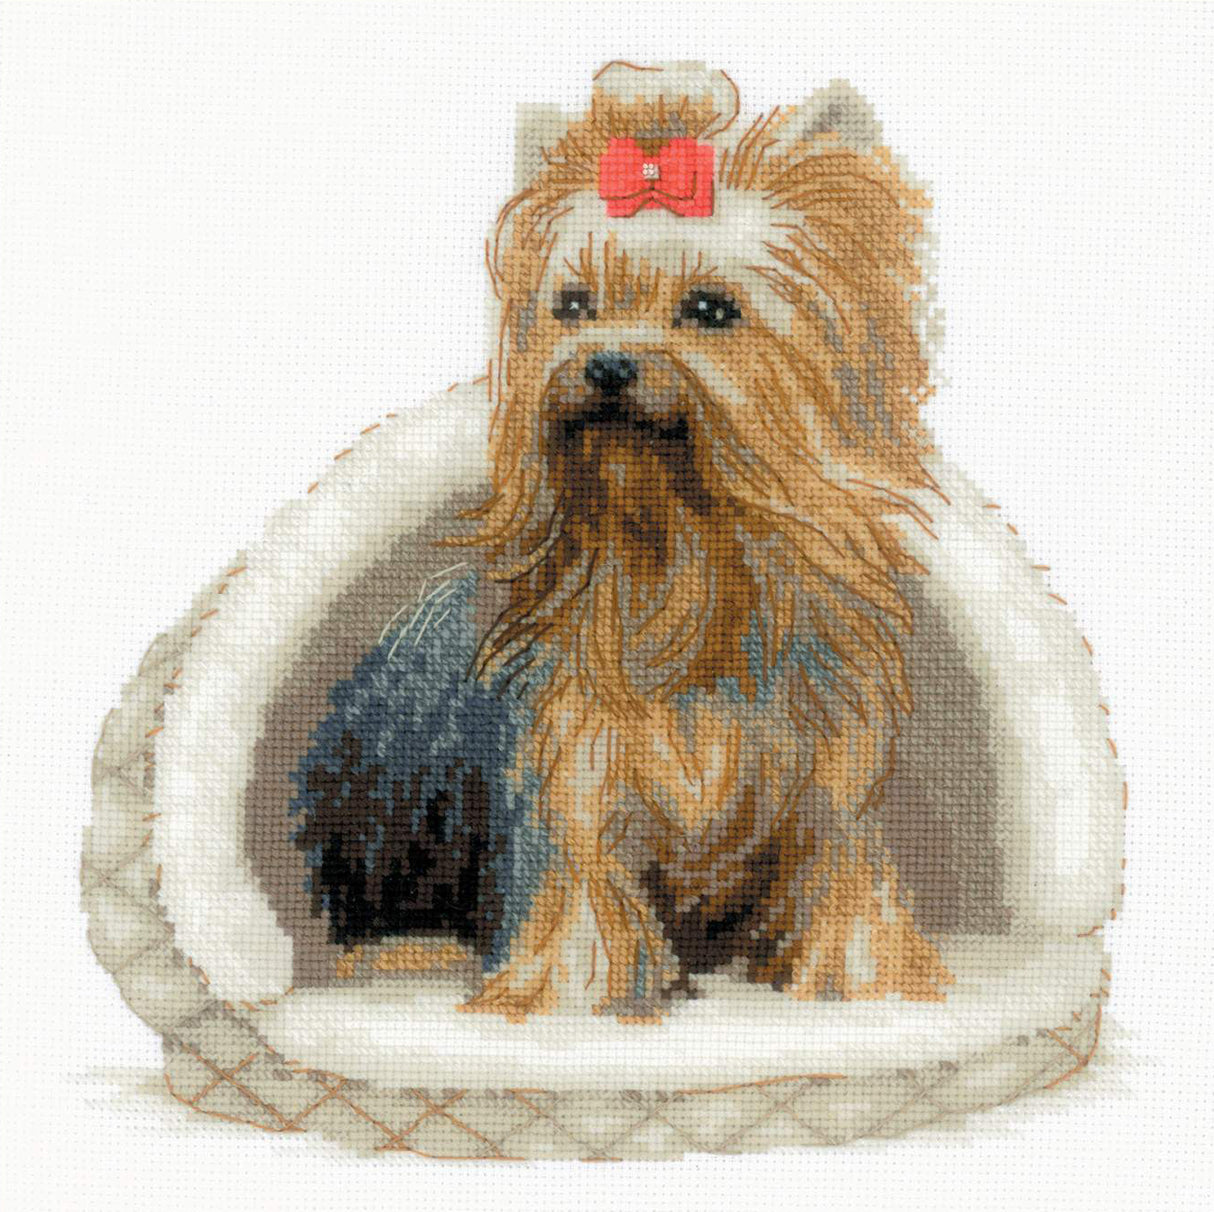 Cross Stitch Kit - "Faithful Companion: Yorkshire Terrier" - Riolis 2152